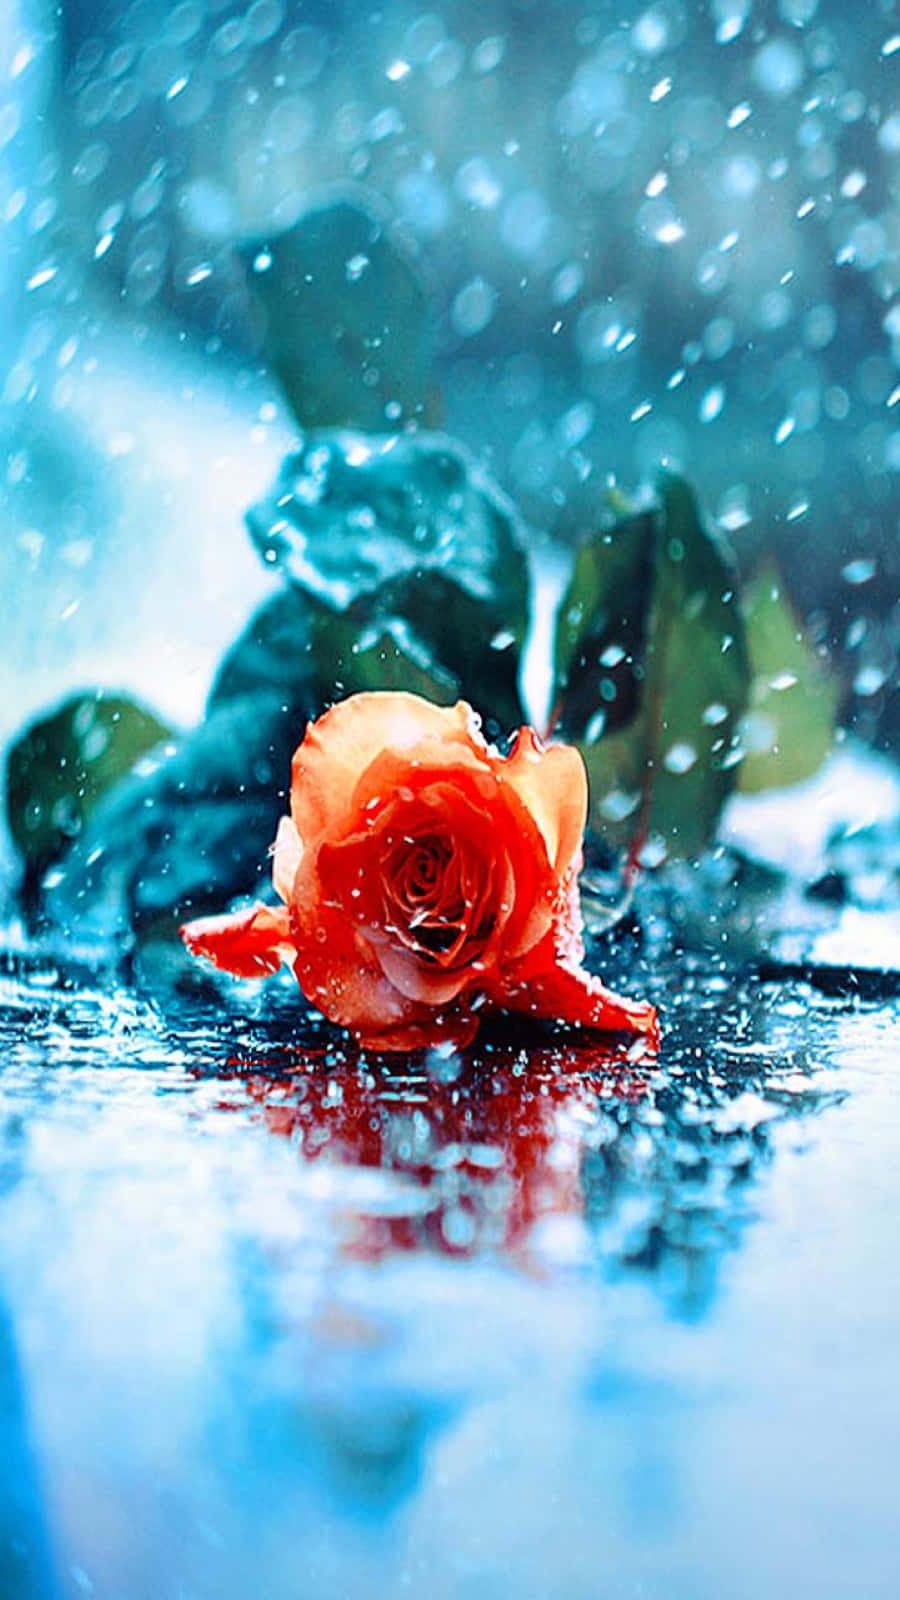 Enchanting Rose amidst Raindrops Wallpaper